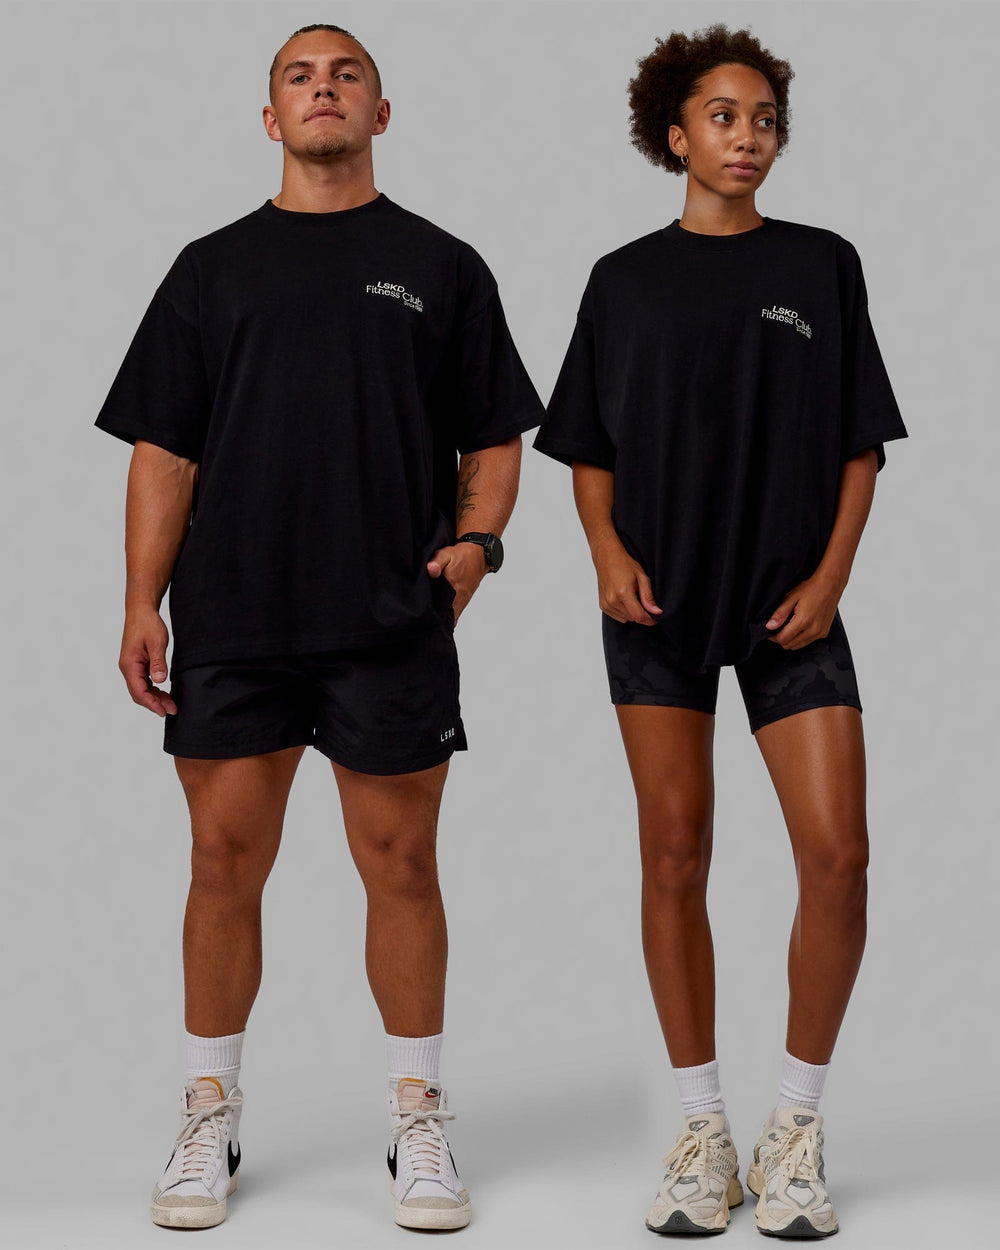 Duo wearing Unisex Fitness Club Heavyweight Tee Oversize - Black-Off White